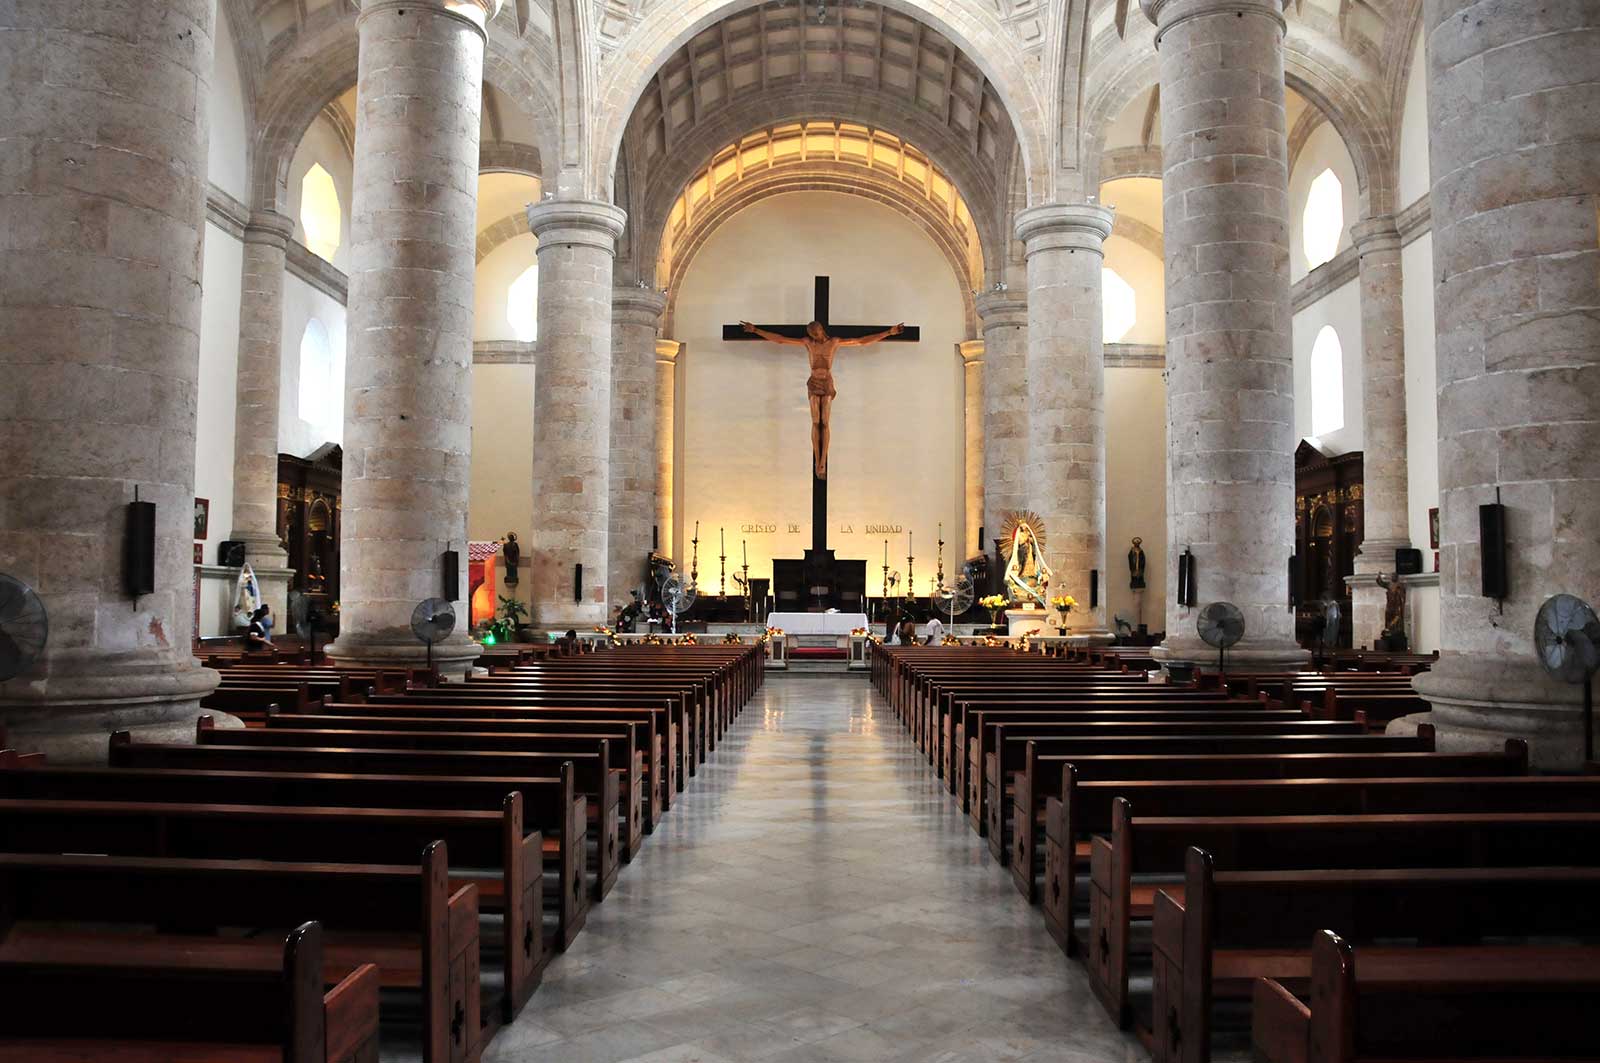 Cathedral de SanIldefonso, Merida